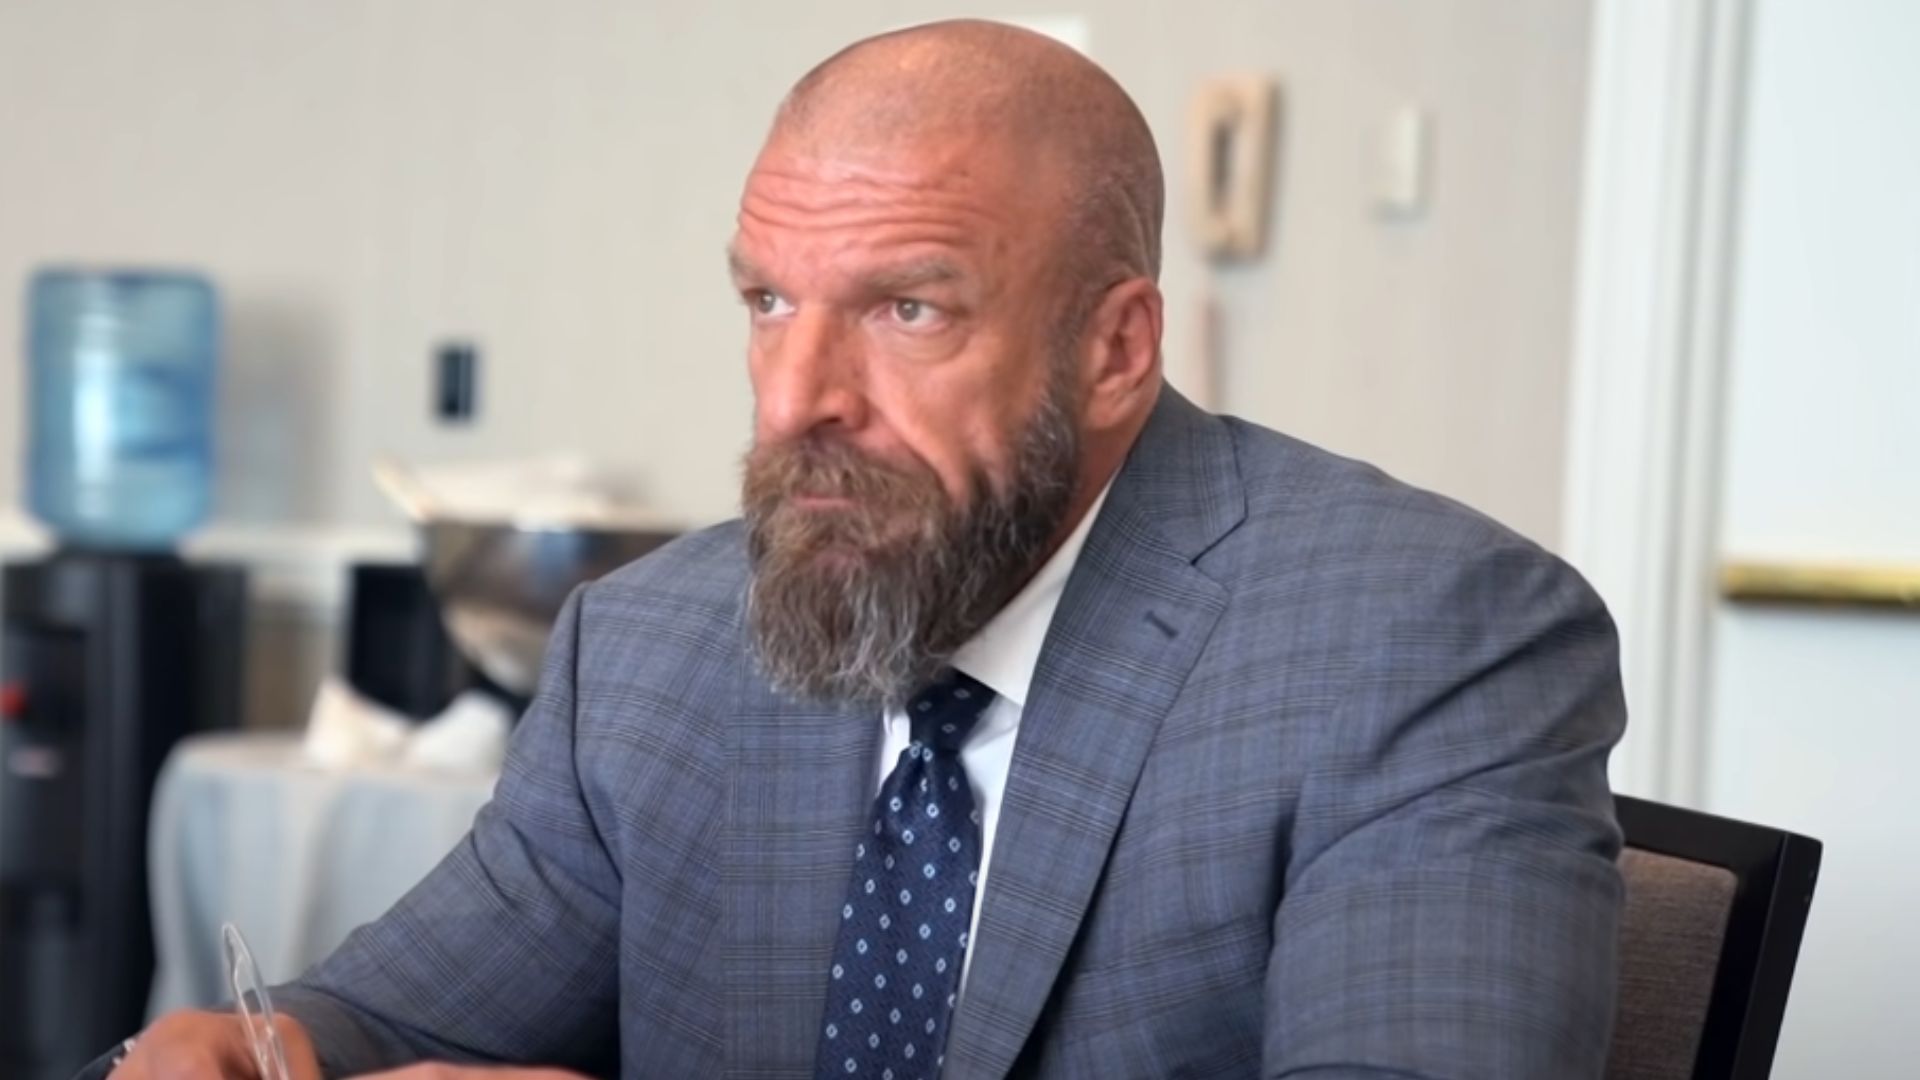 14-time WWE world champion Triple H